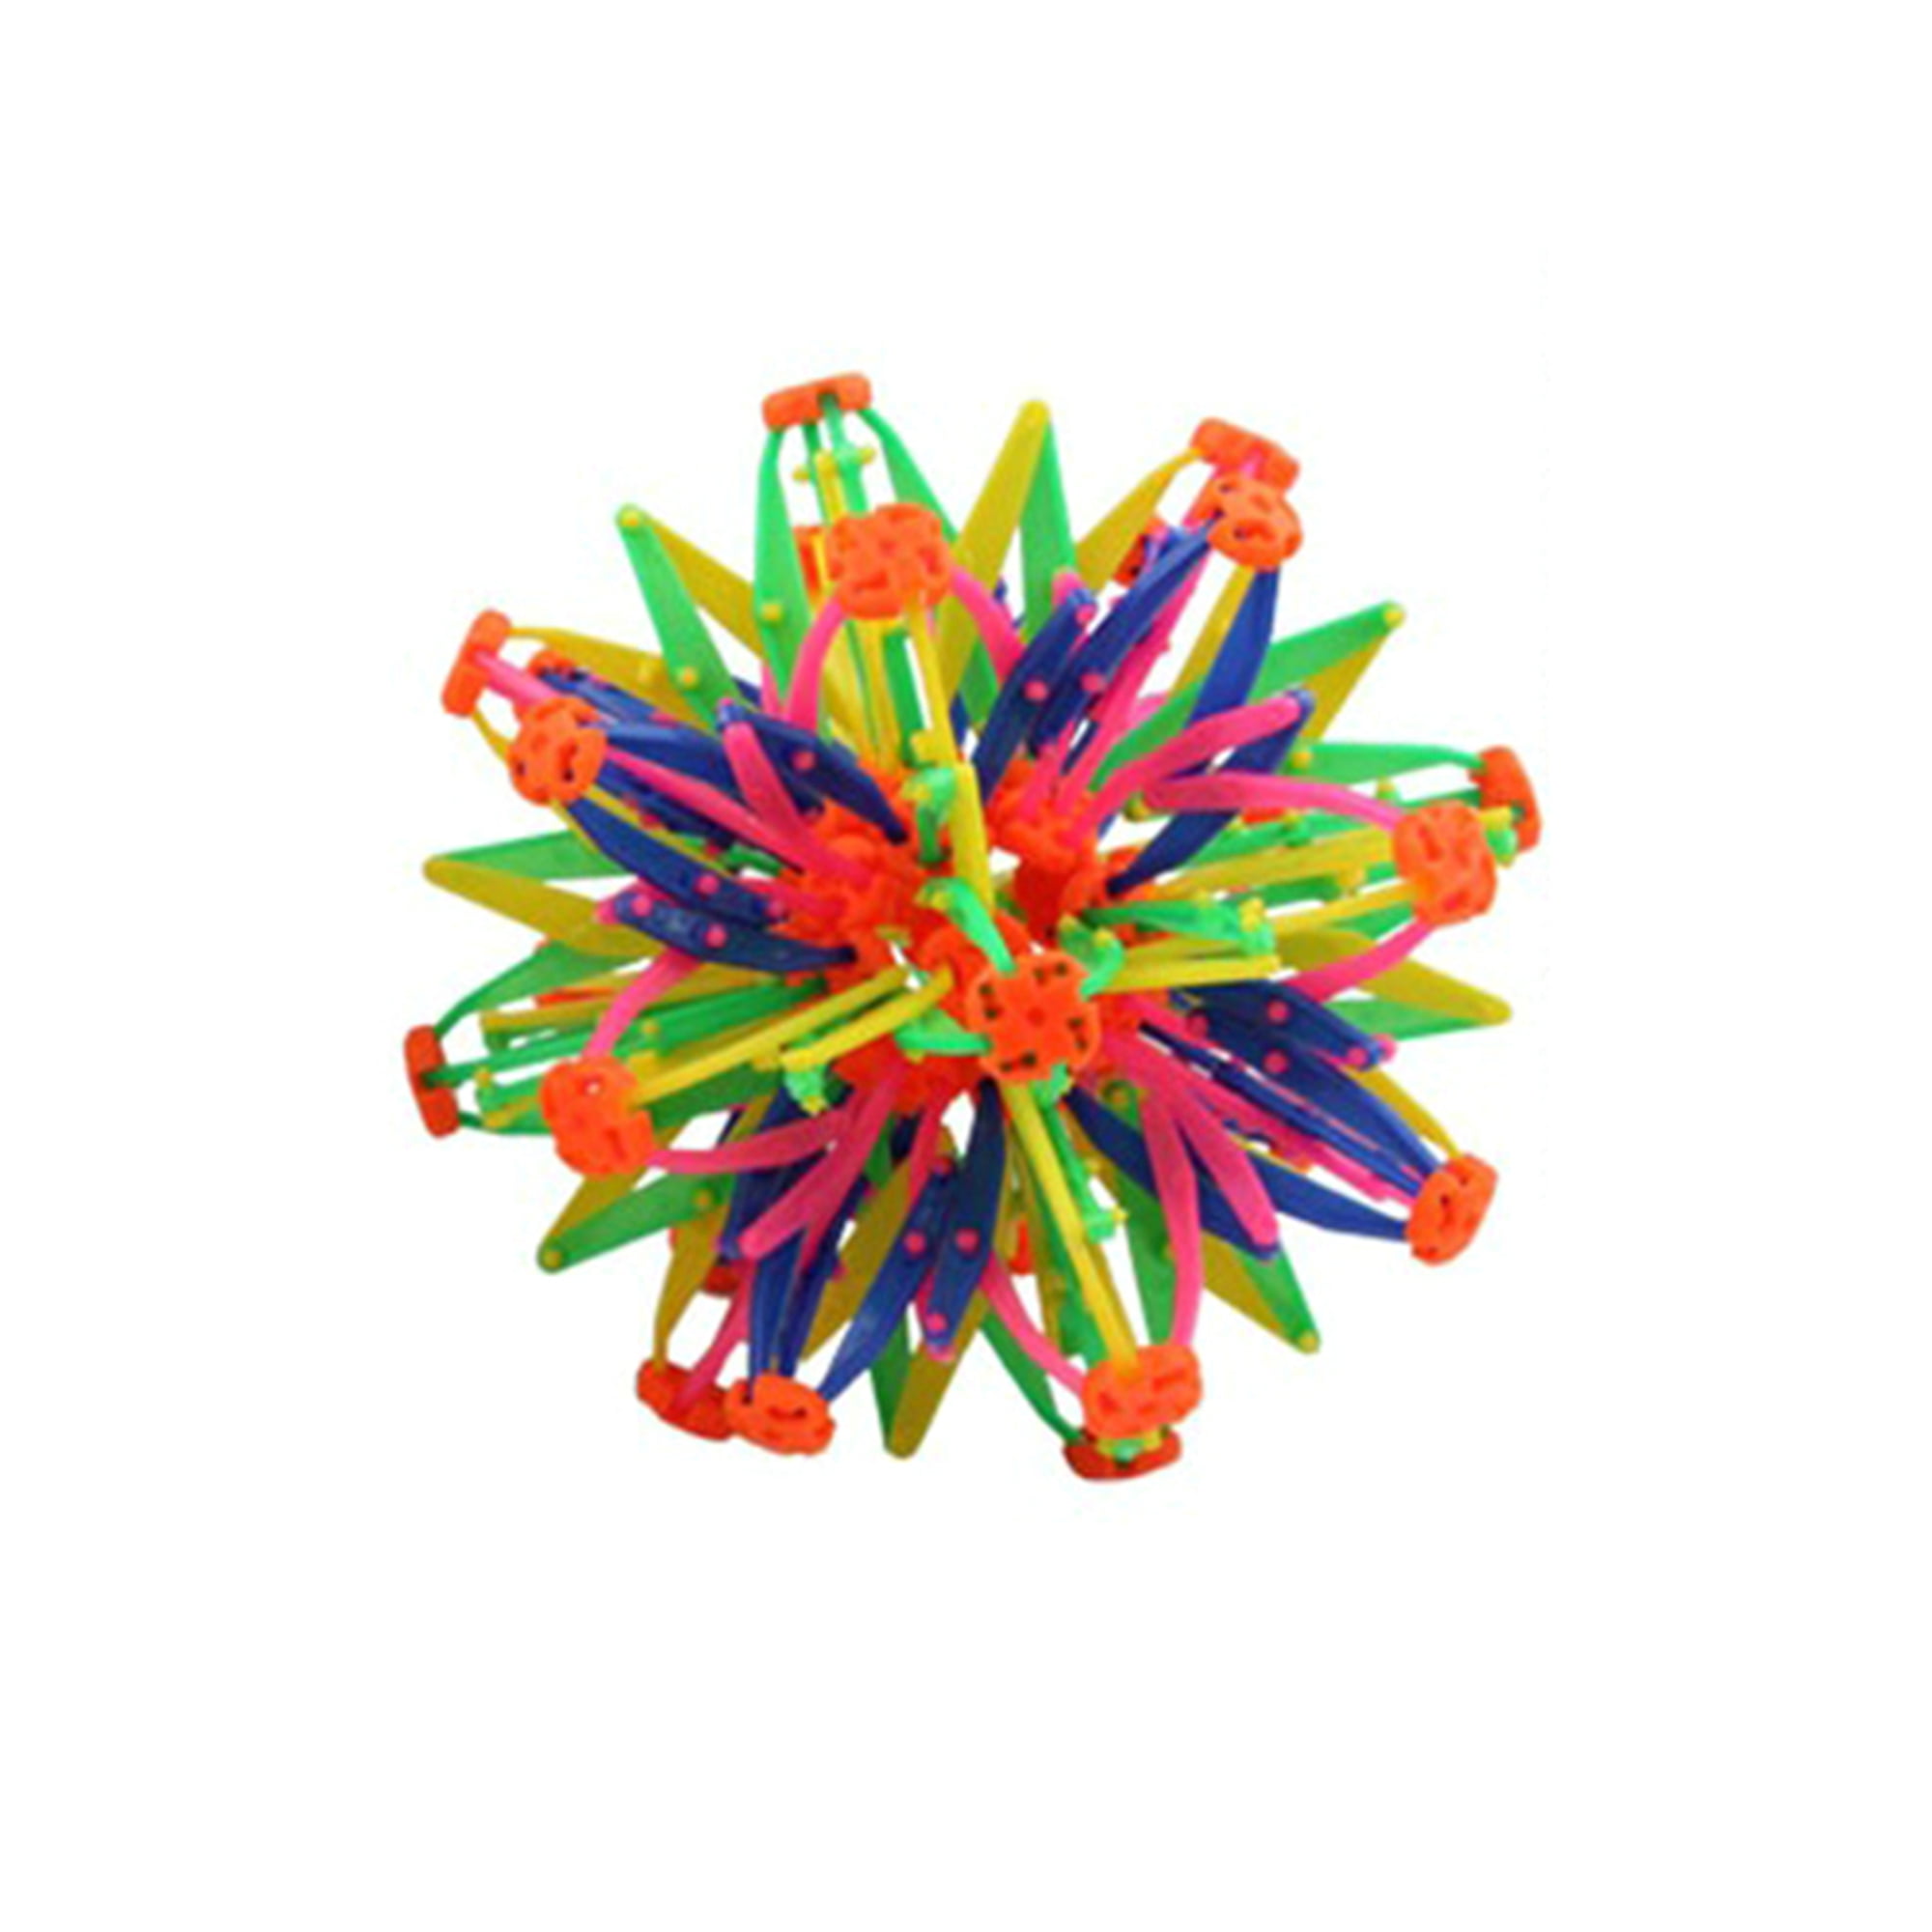 Stress Reliefer Fluorescent Sticky Target Balls UK vw% 